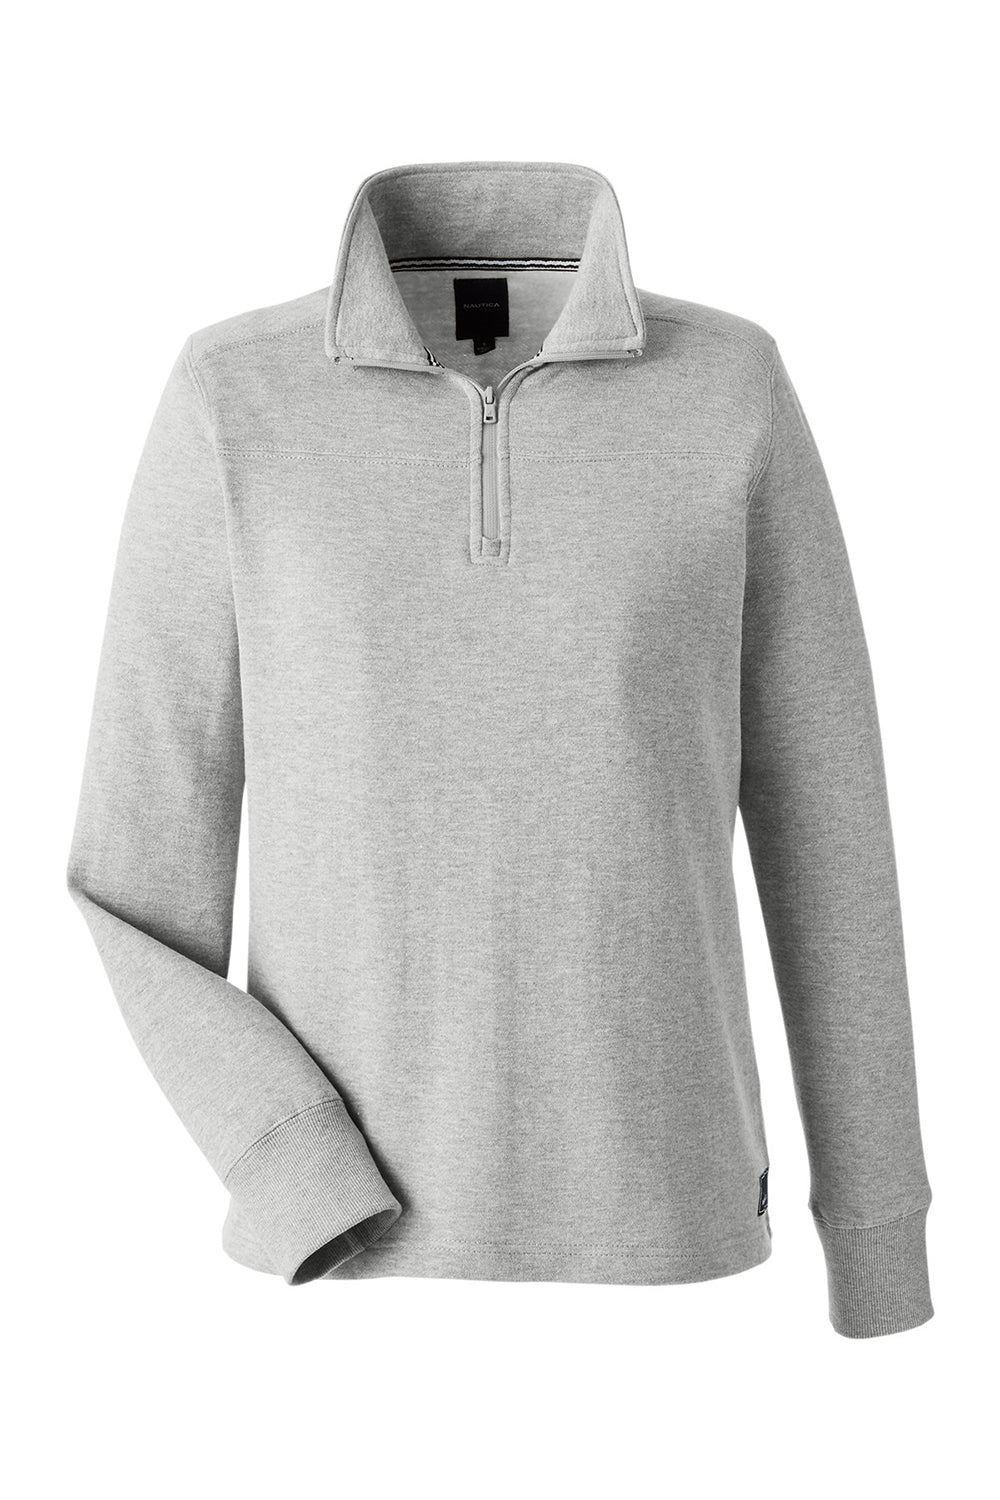 Nautica N17397 Womens Anchor Fleece 1/4 Zip Sweatshirt Oxford Grey Flat Front